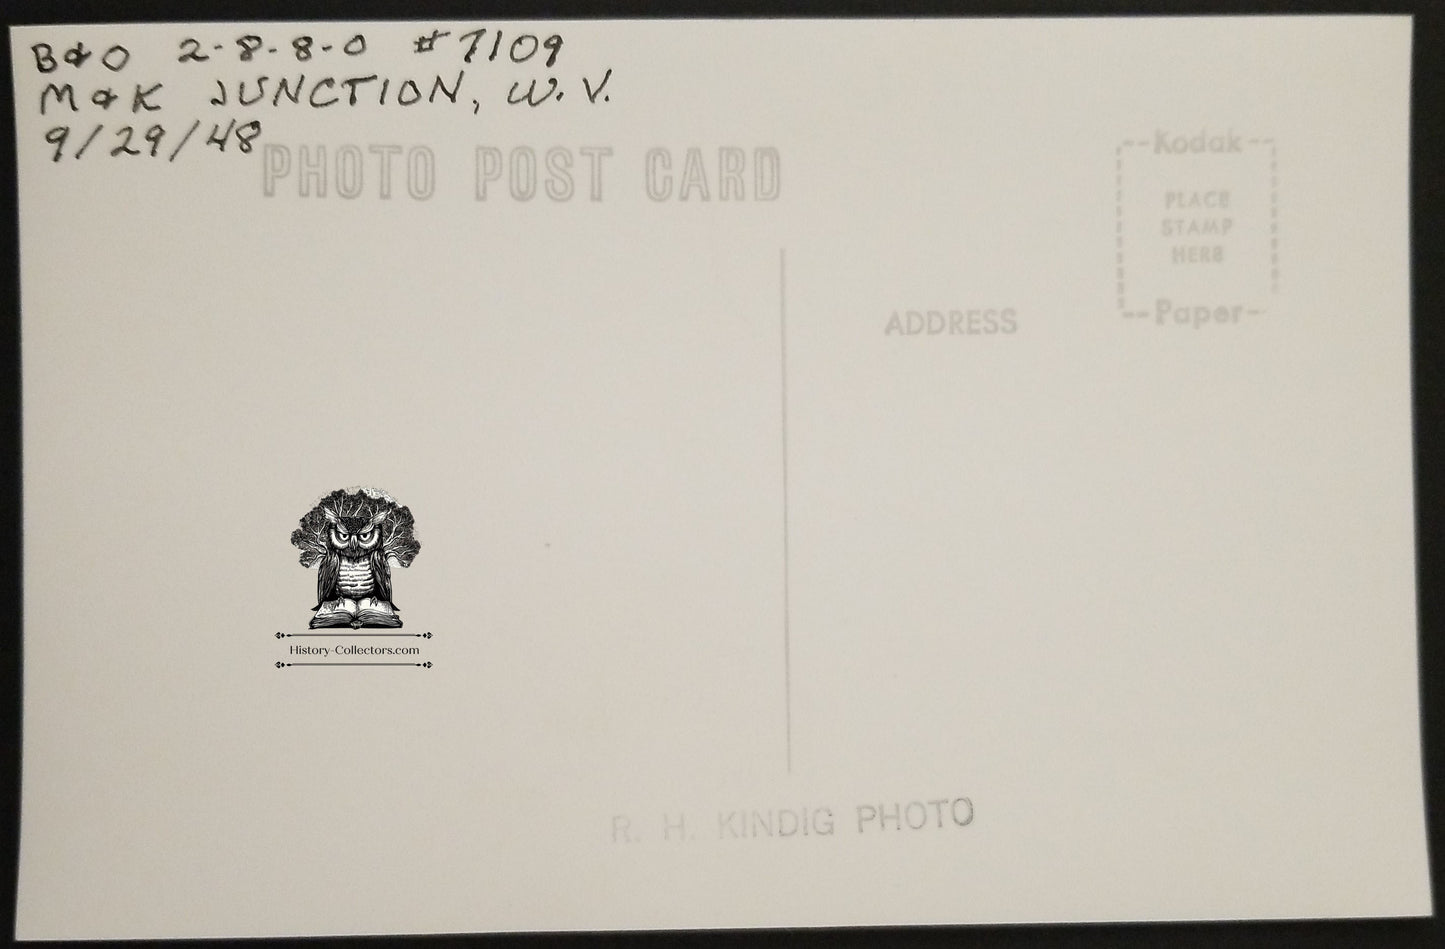 1948 RPPC Picture Postcard - B&O Railroad Diesel Engine Train 7109 - M&K Junction West Virginia - Kodak Stamp Box - Photographer Kindig